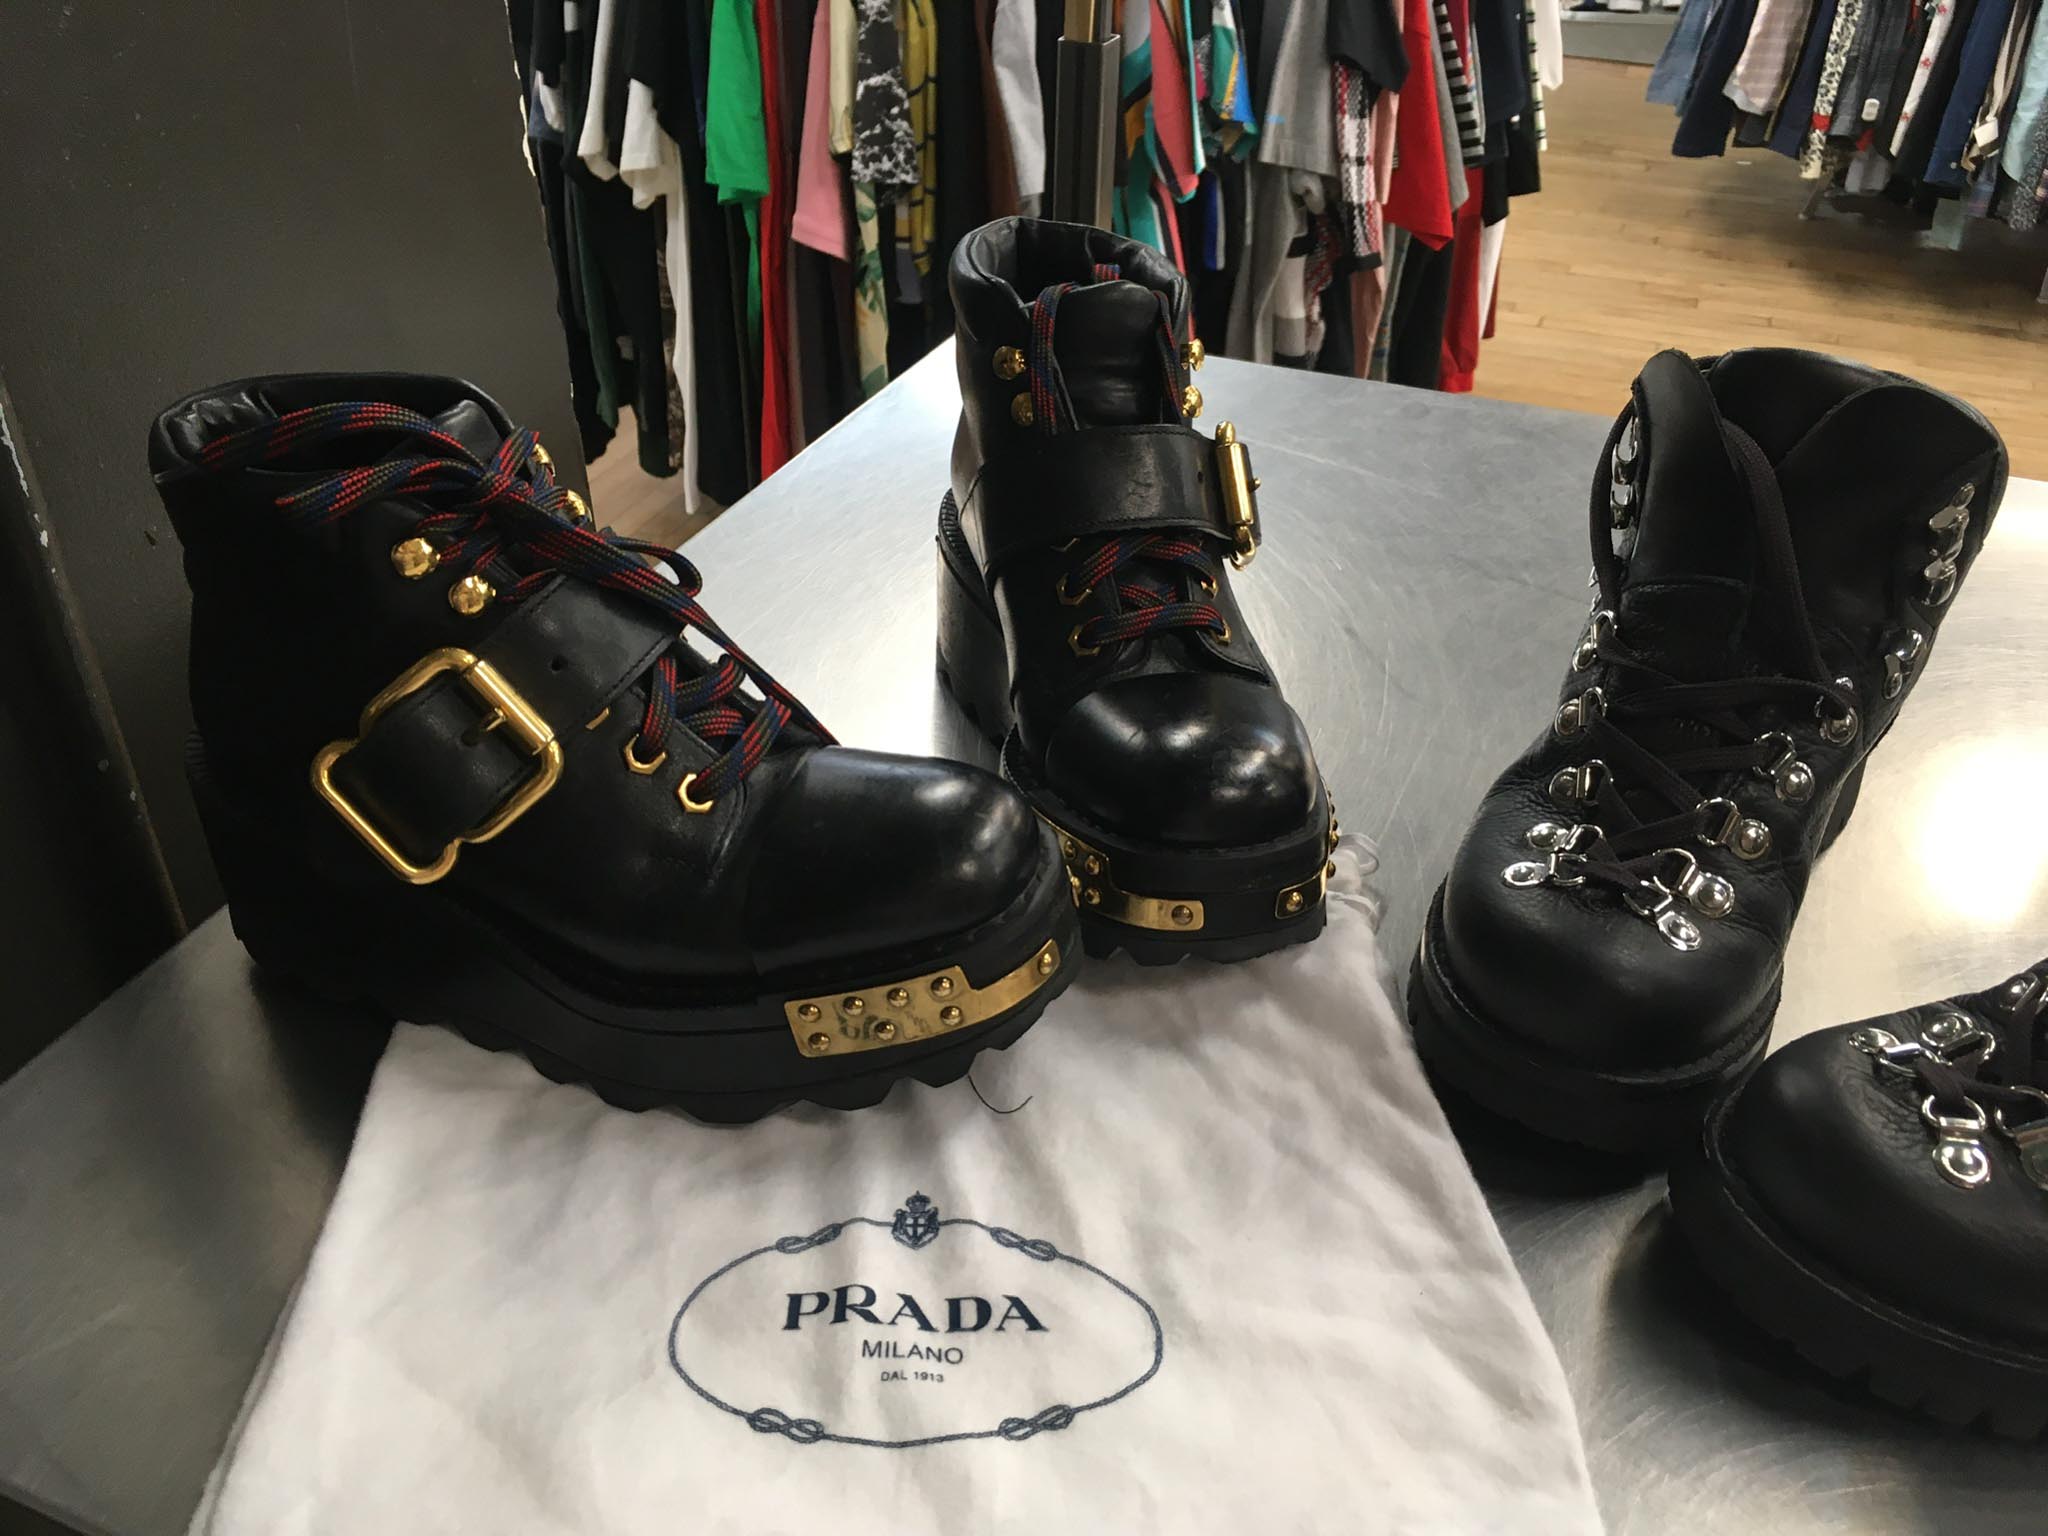 Black lace-up Prada boots